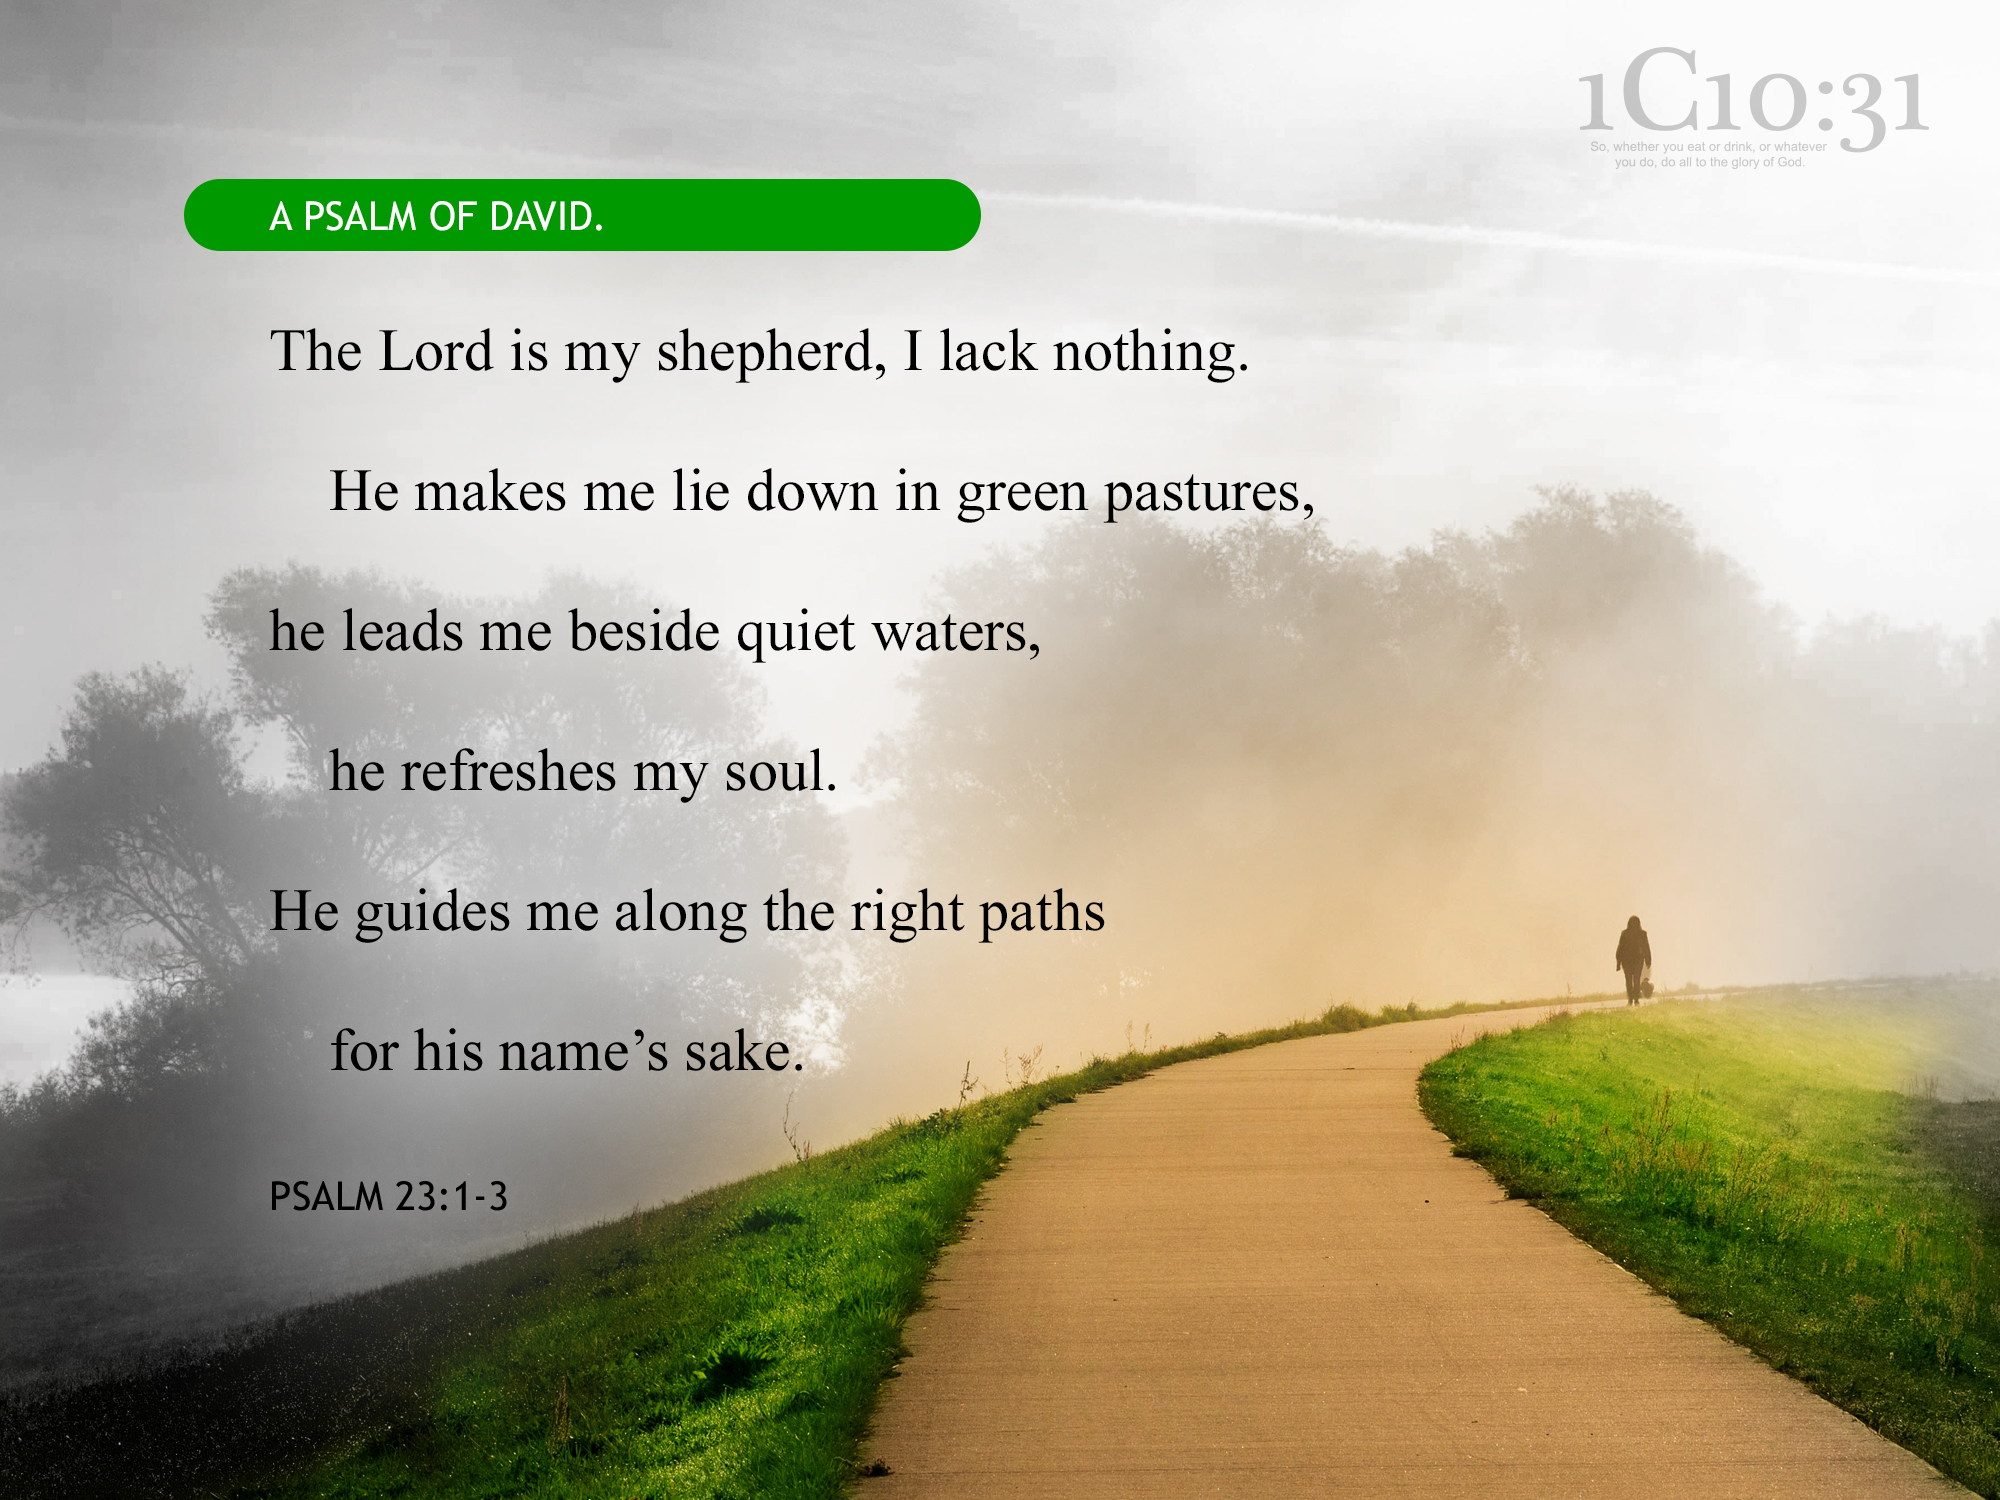 Psalm 23:1-3